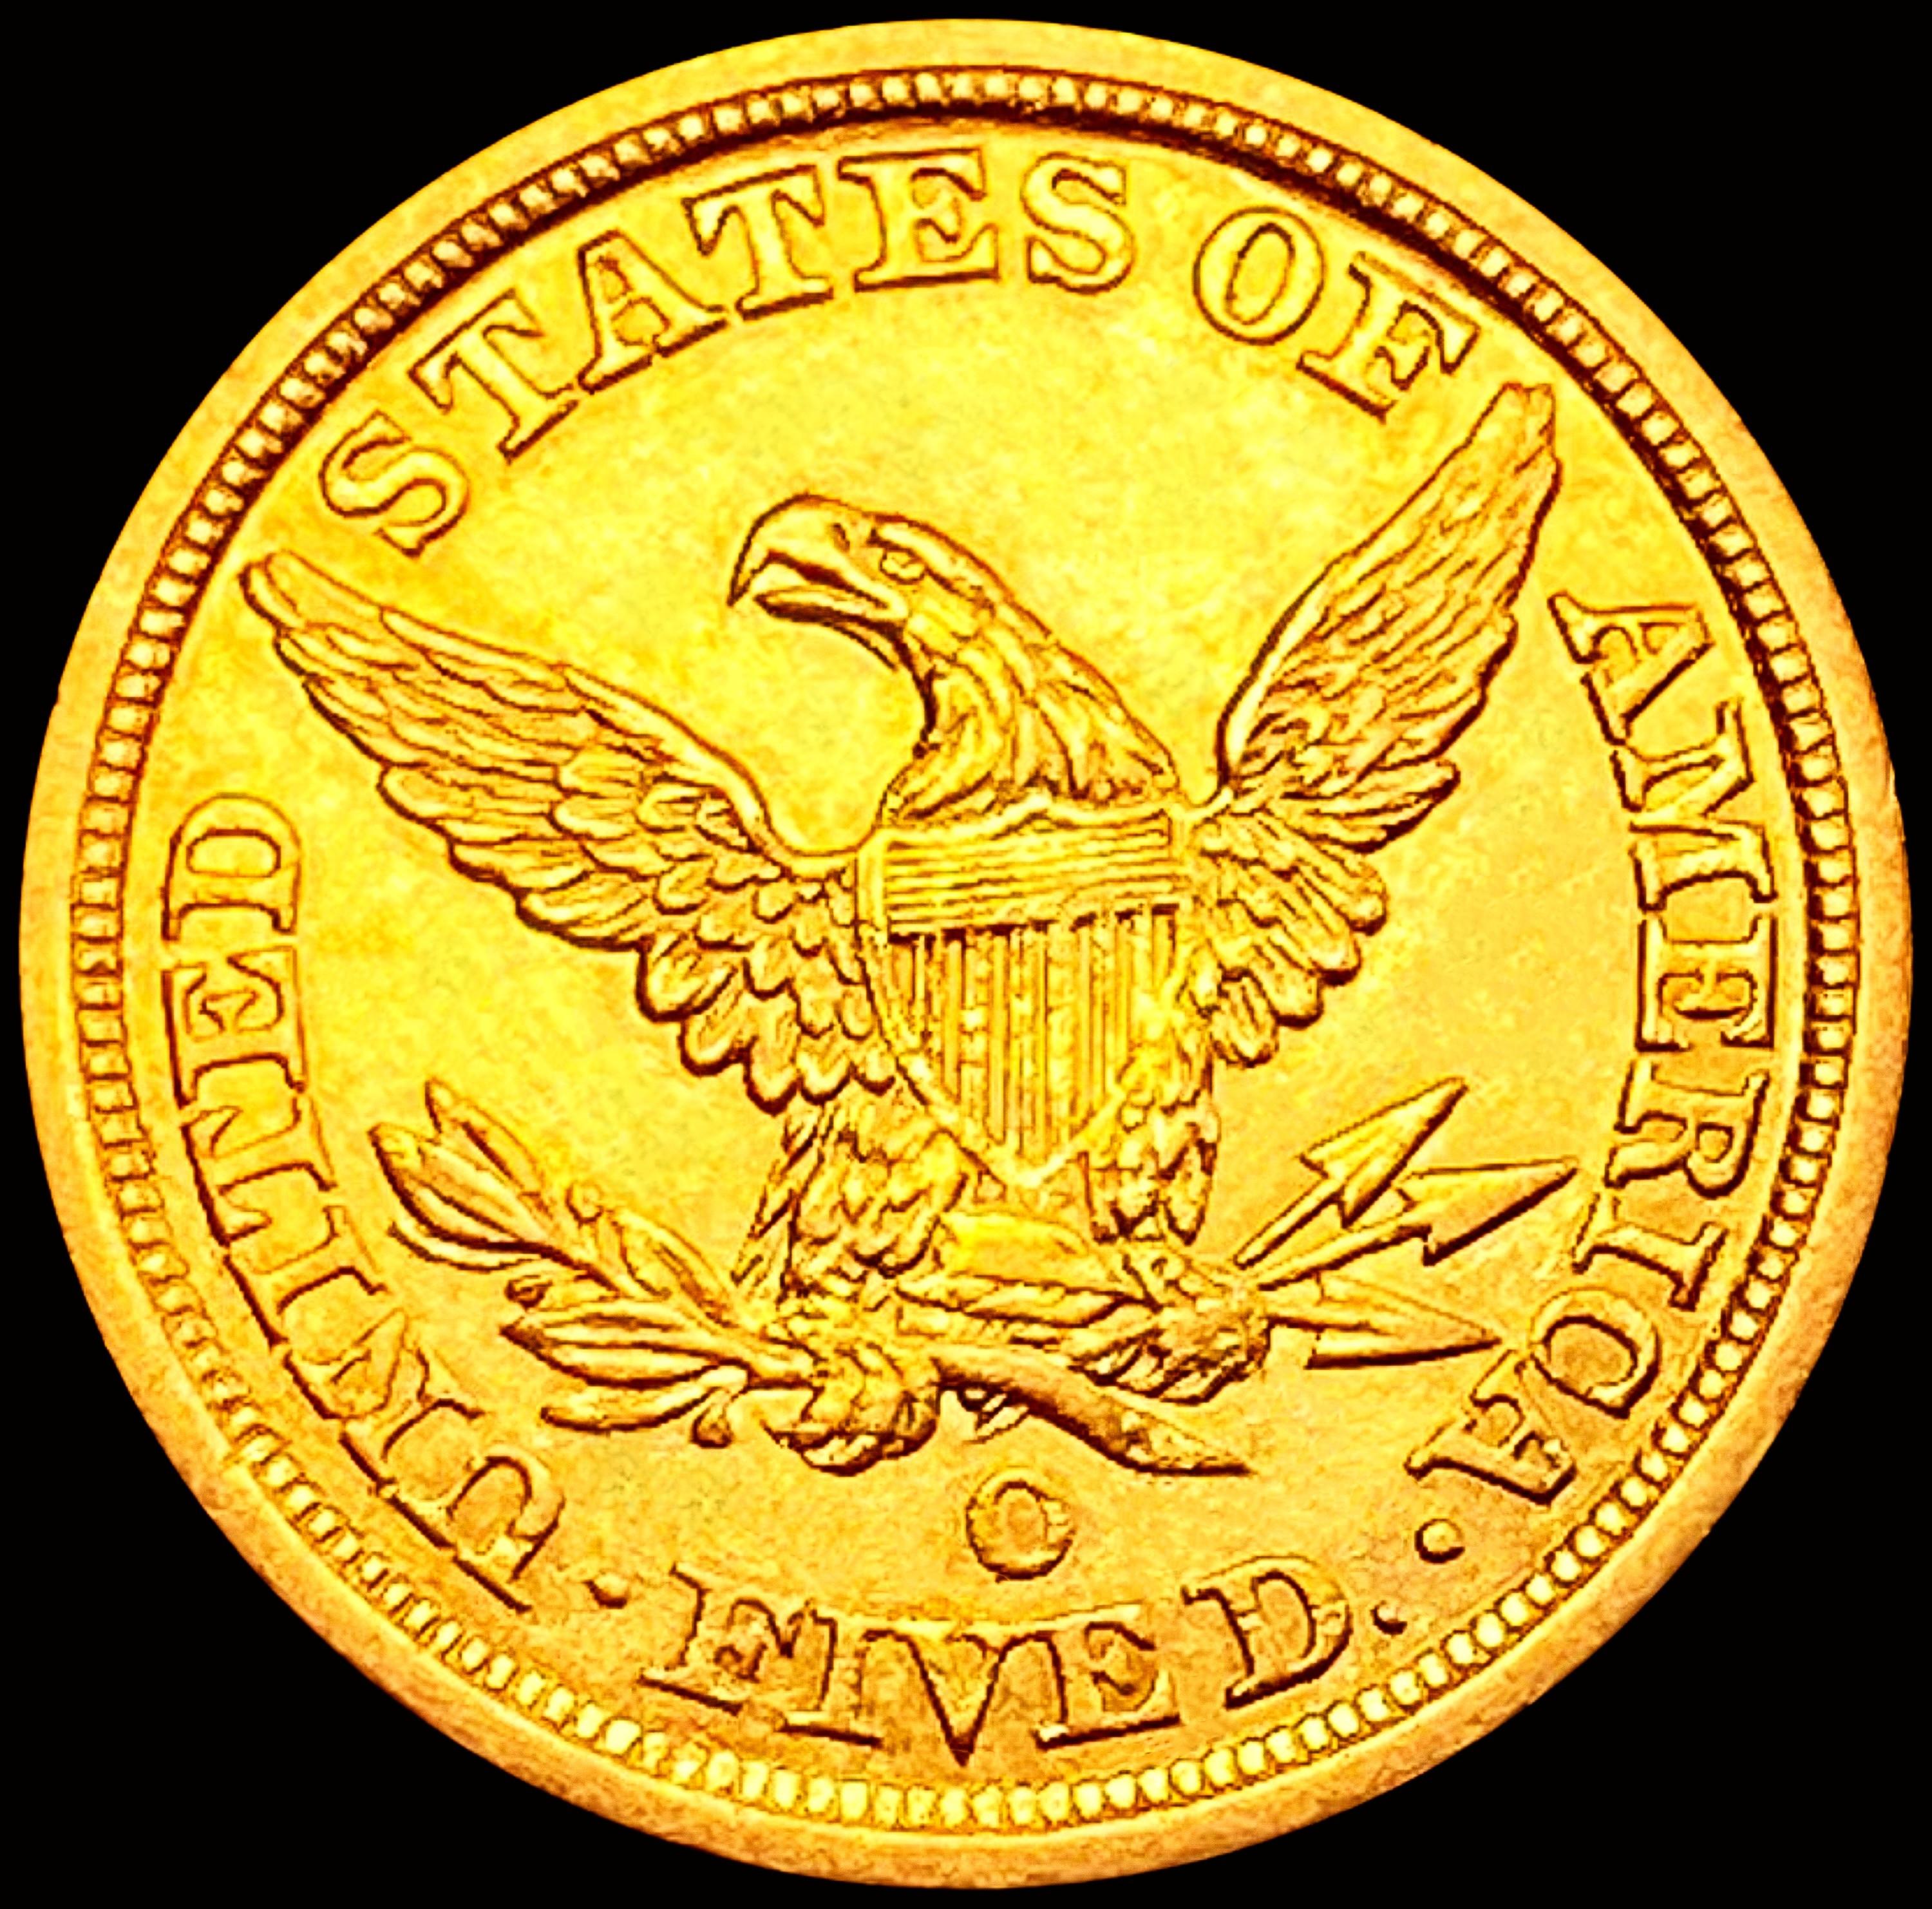 1844-O $5 Gold Half Eagle UNCIRCULATED